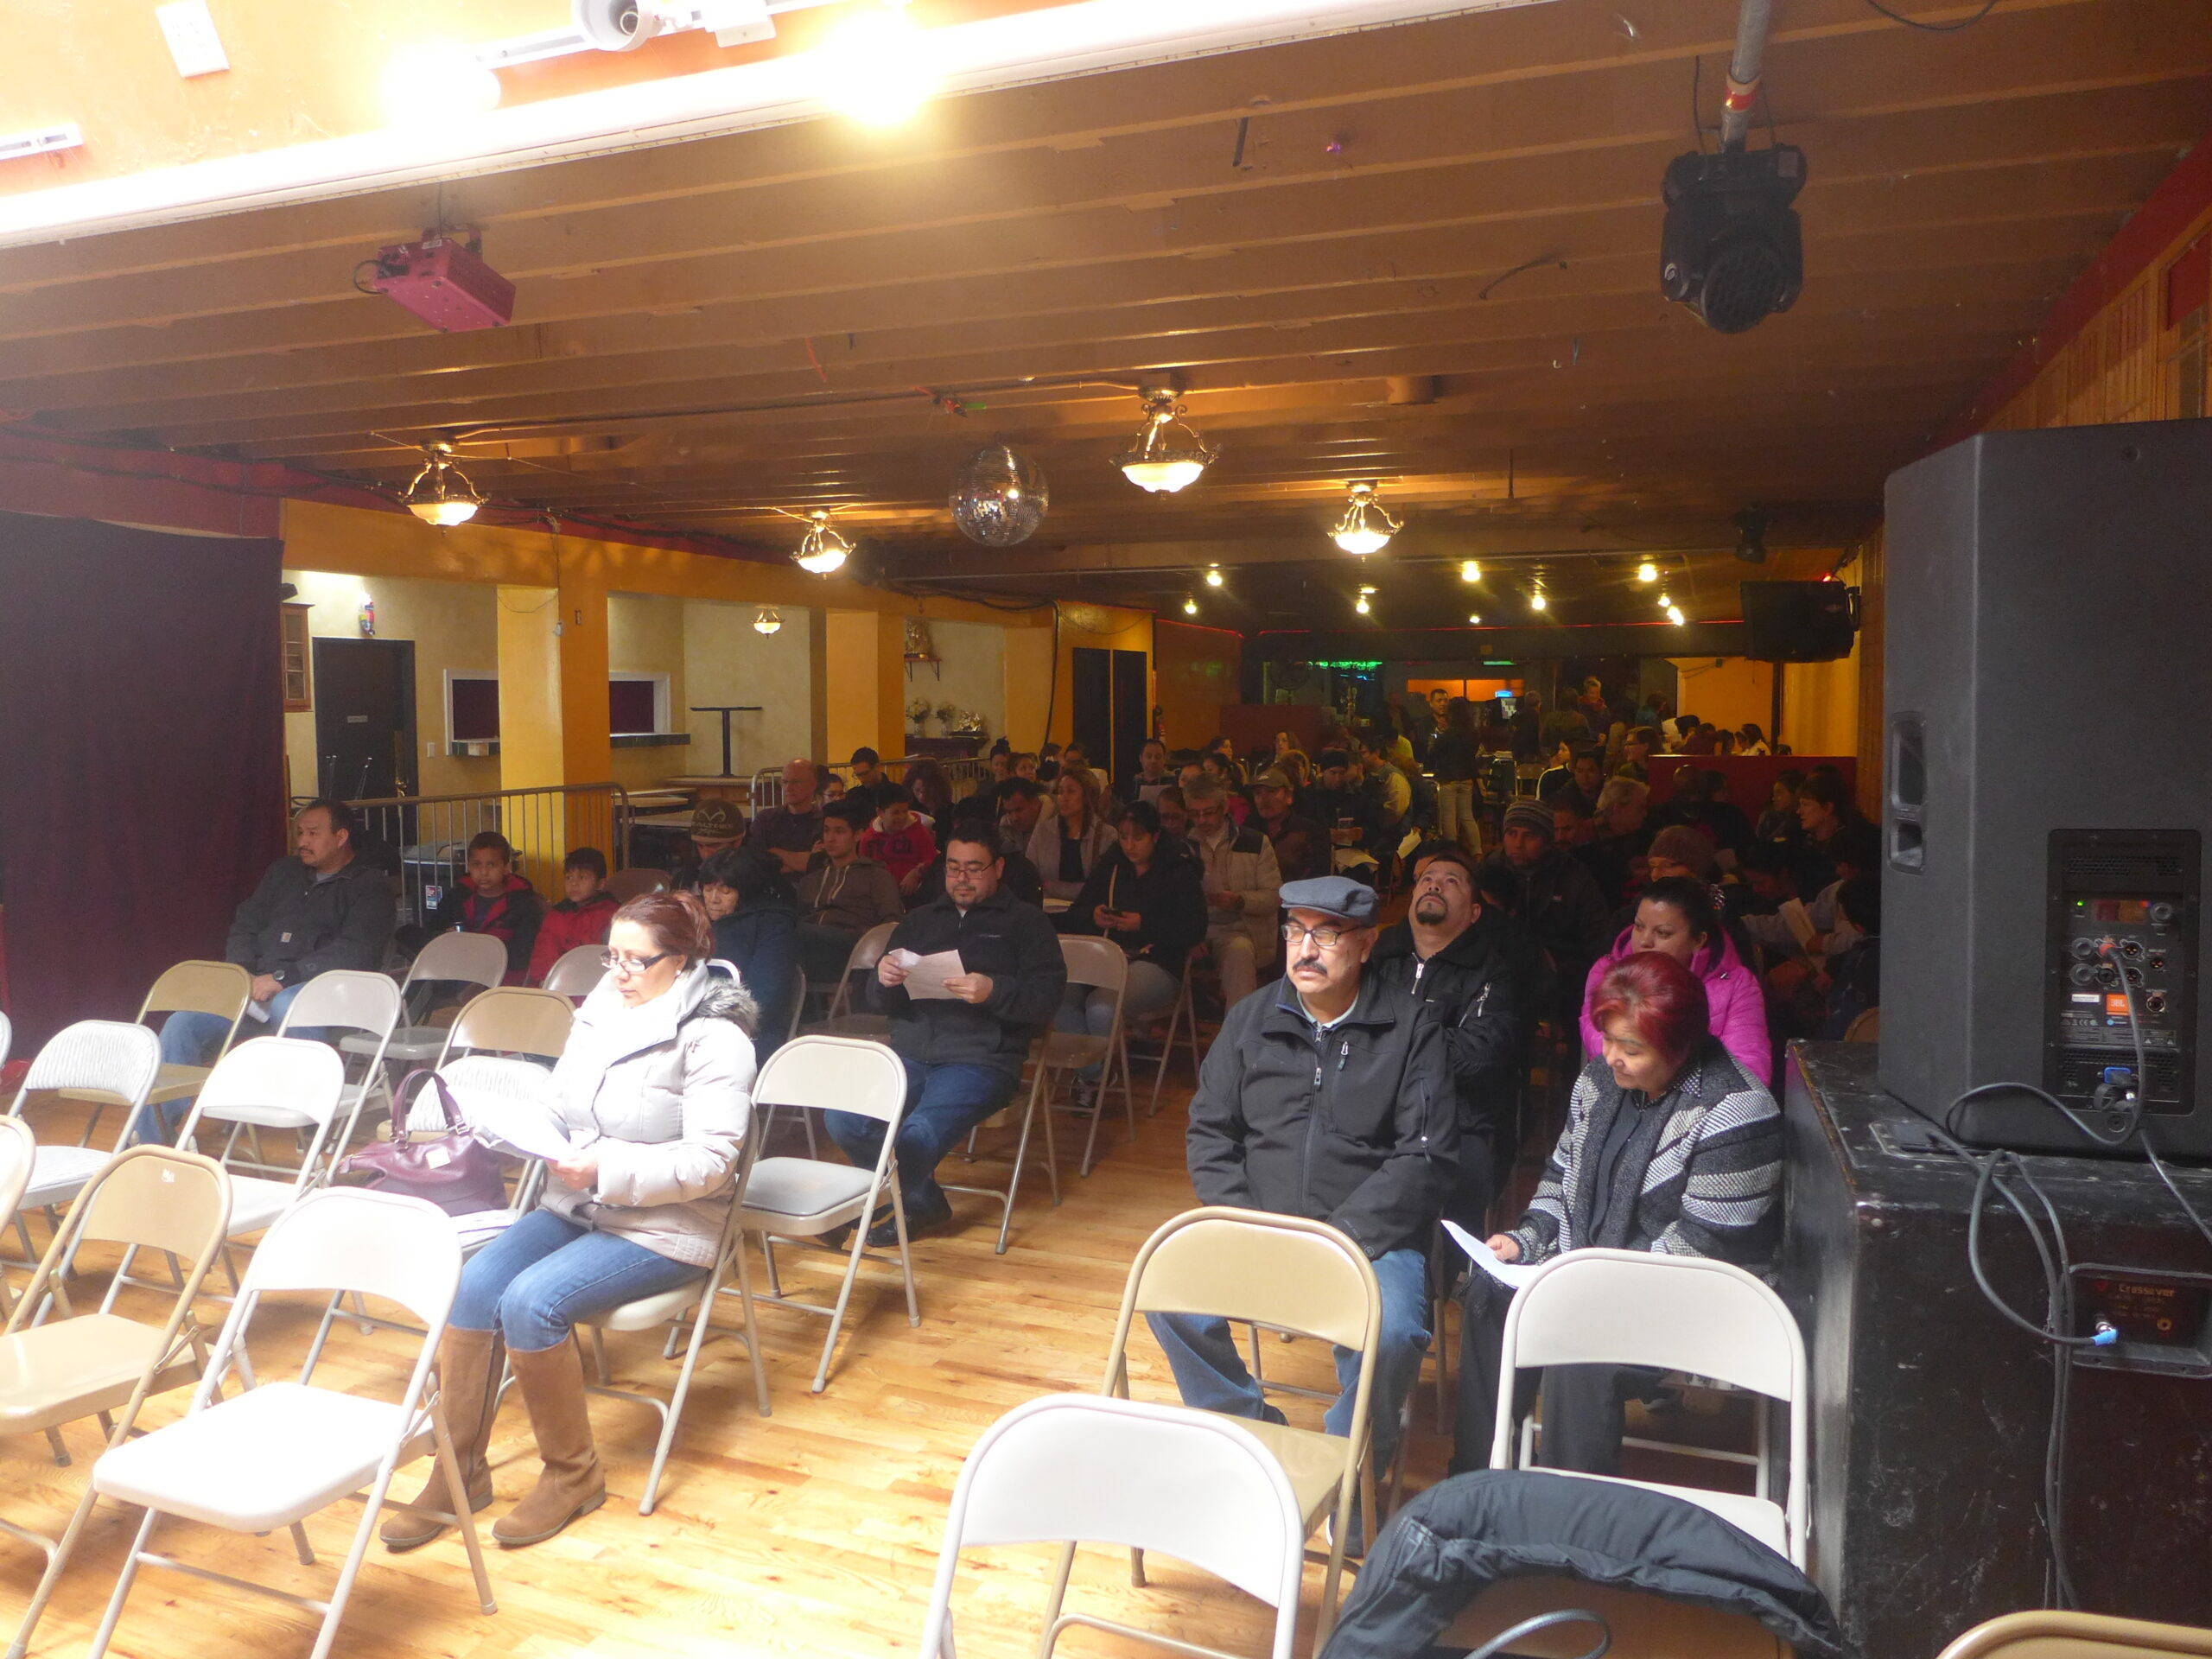 Mixed status immigrant families attend a workshop held by Voces de la Frontera